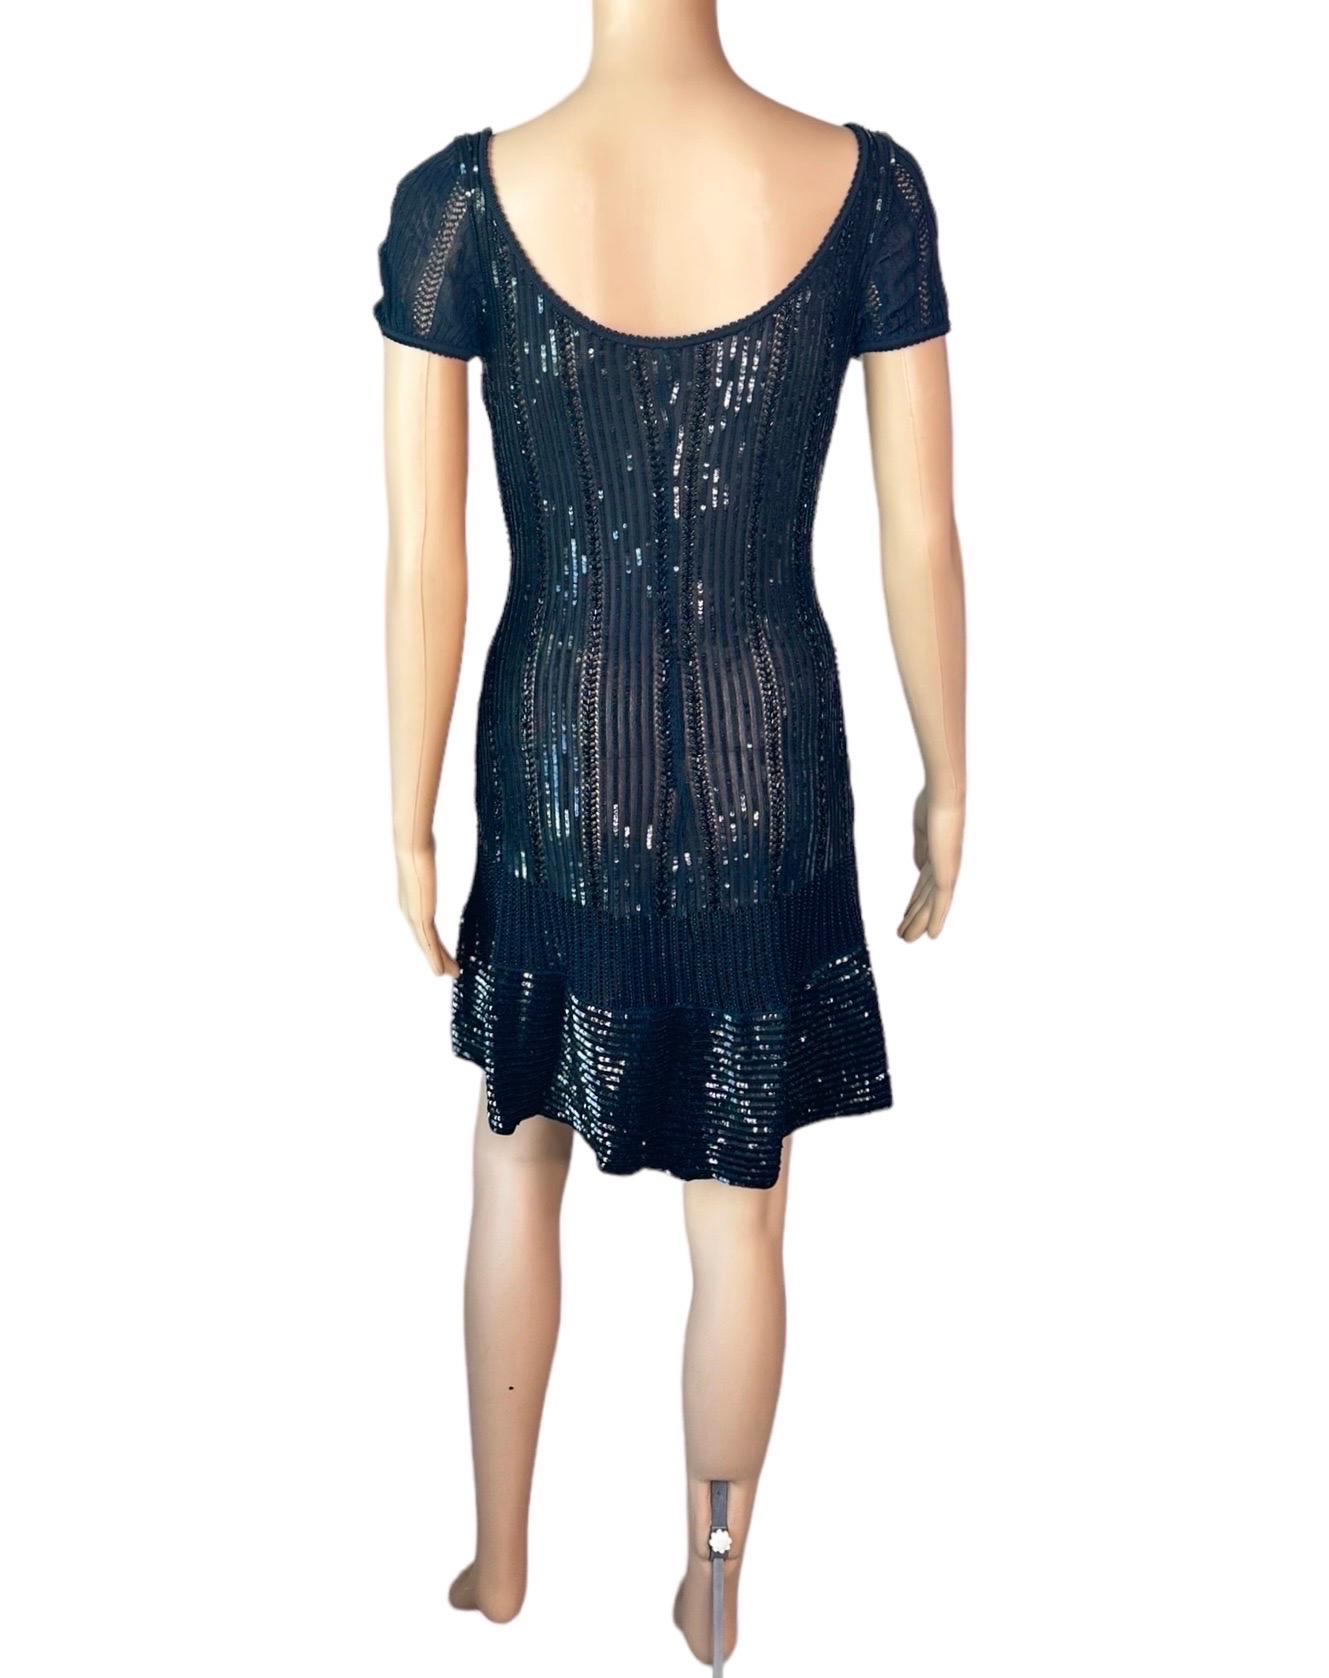 Azzedine Alaia Vintage S/S 1996 Black Sequin Embellished Mini Dress For Sale 7